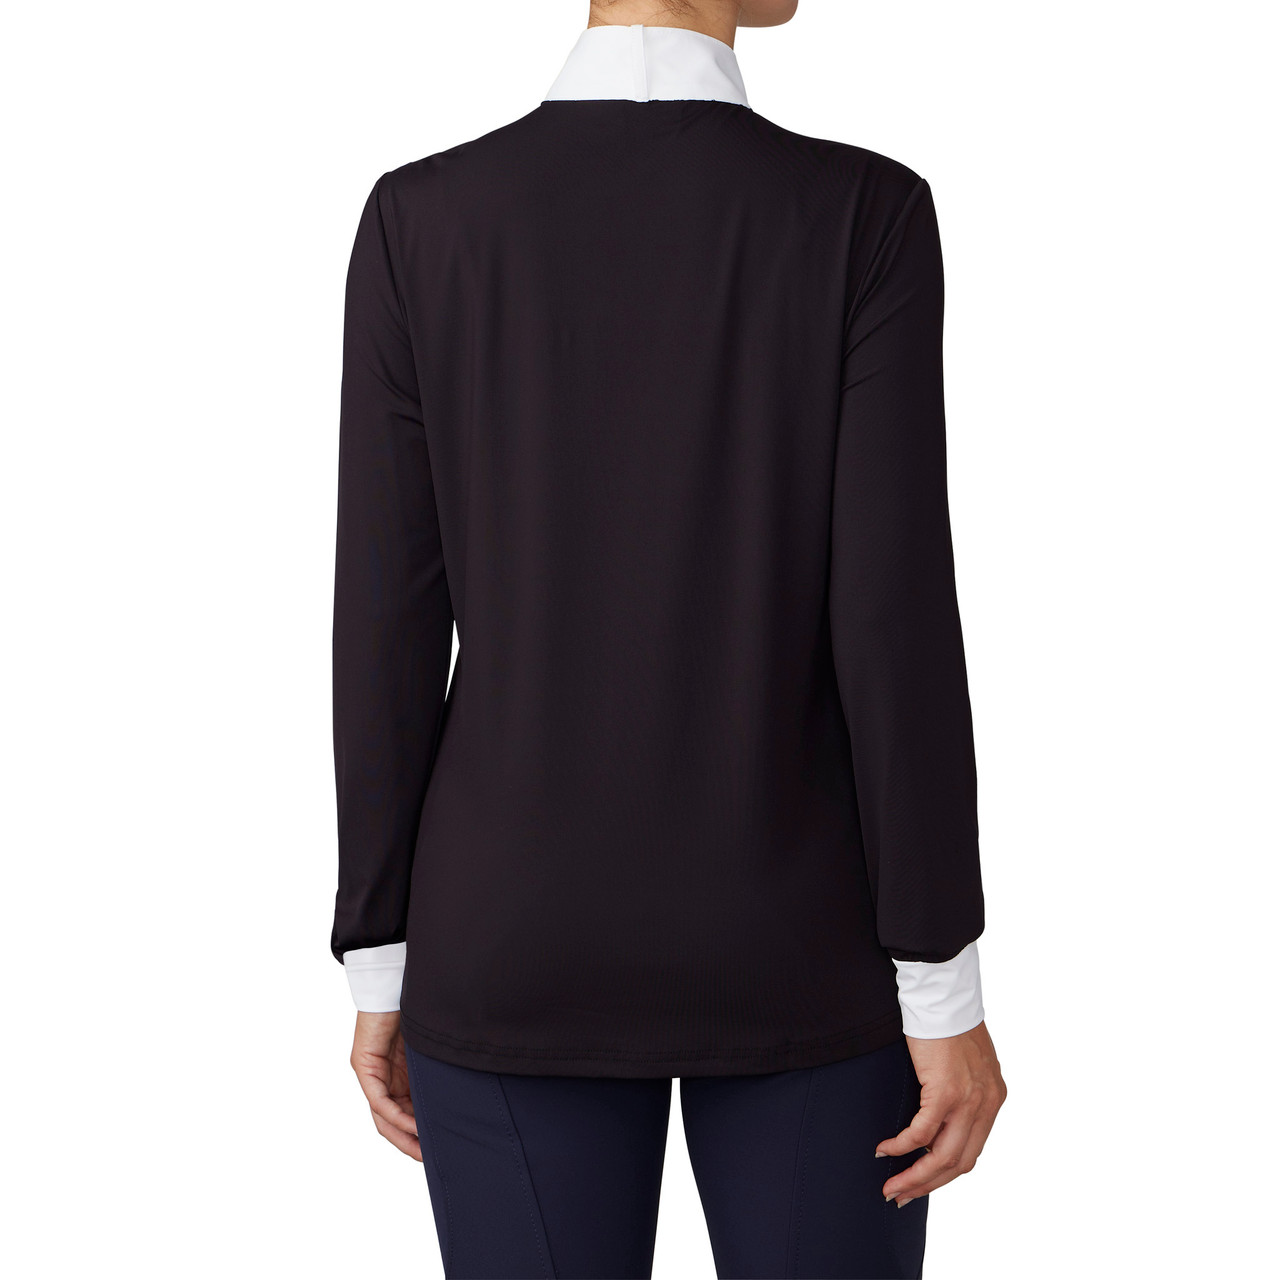 Ovation Elegance Grace Ladies Long Sleeve Show Shirt - black